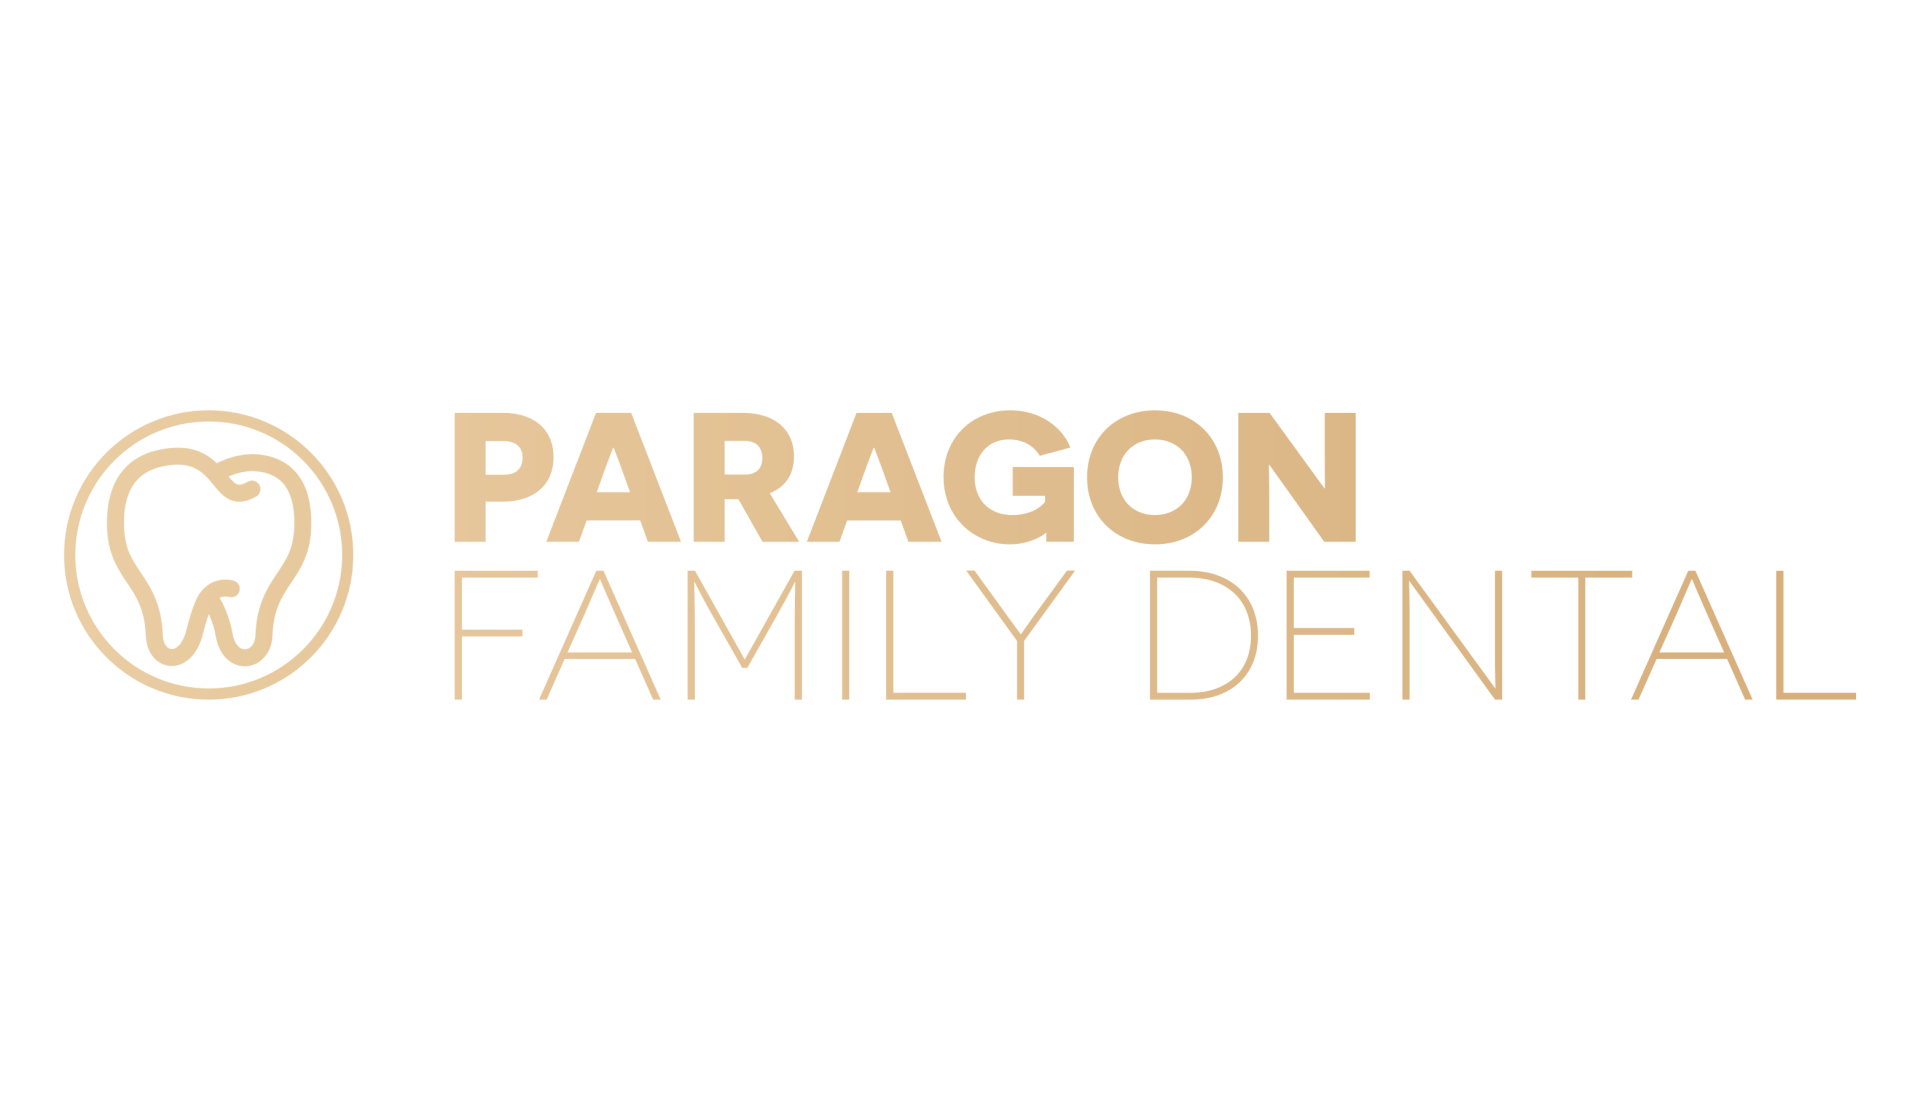 Paragon Family Dental